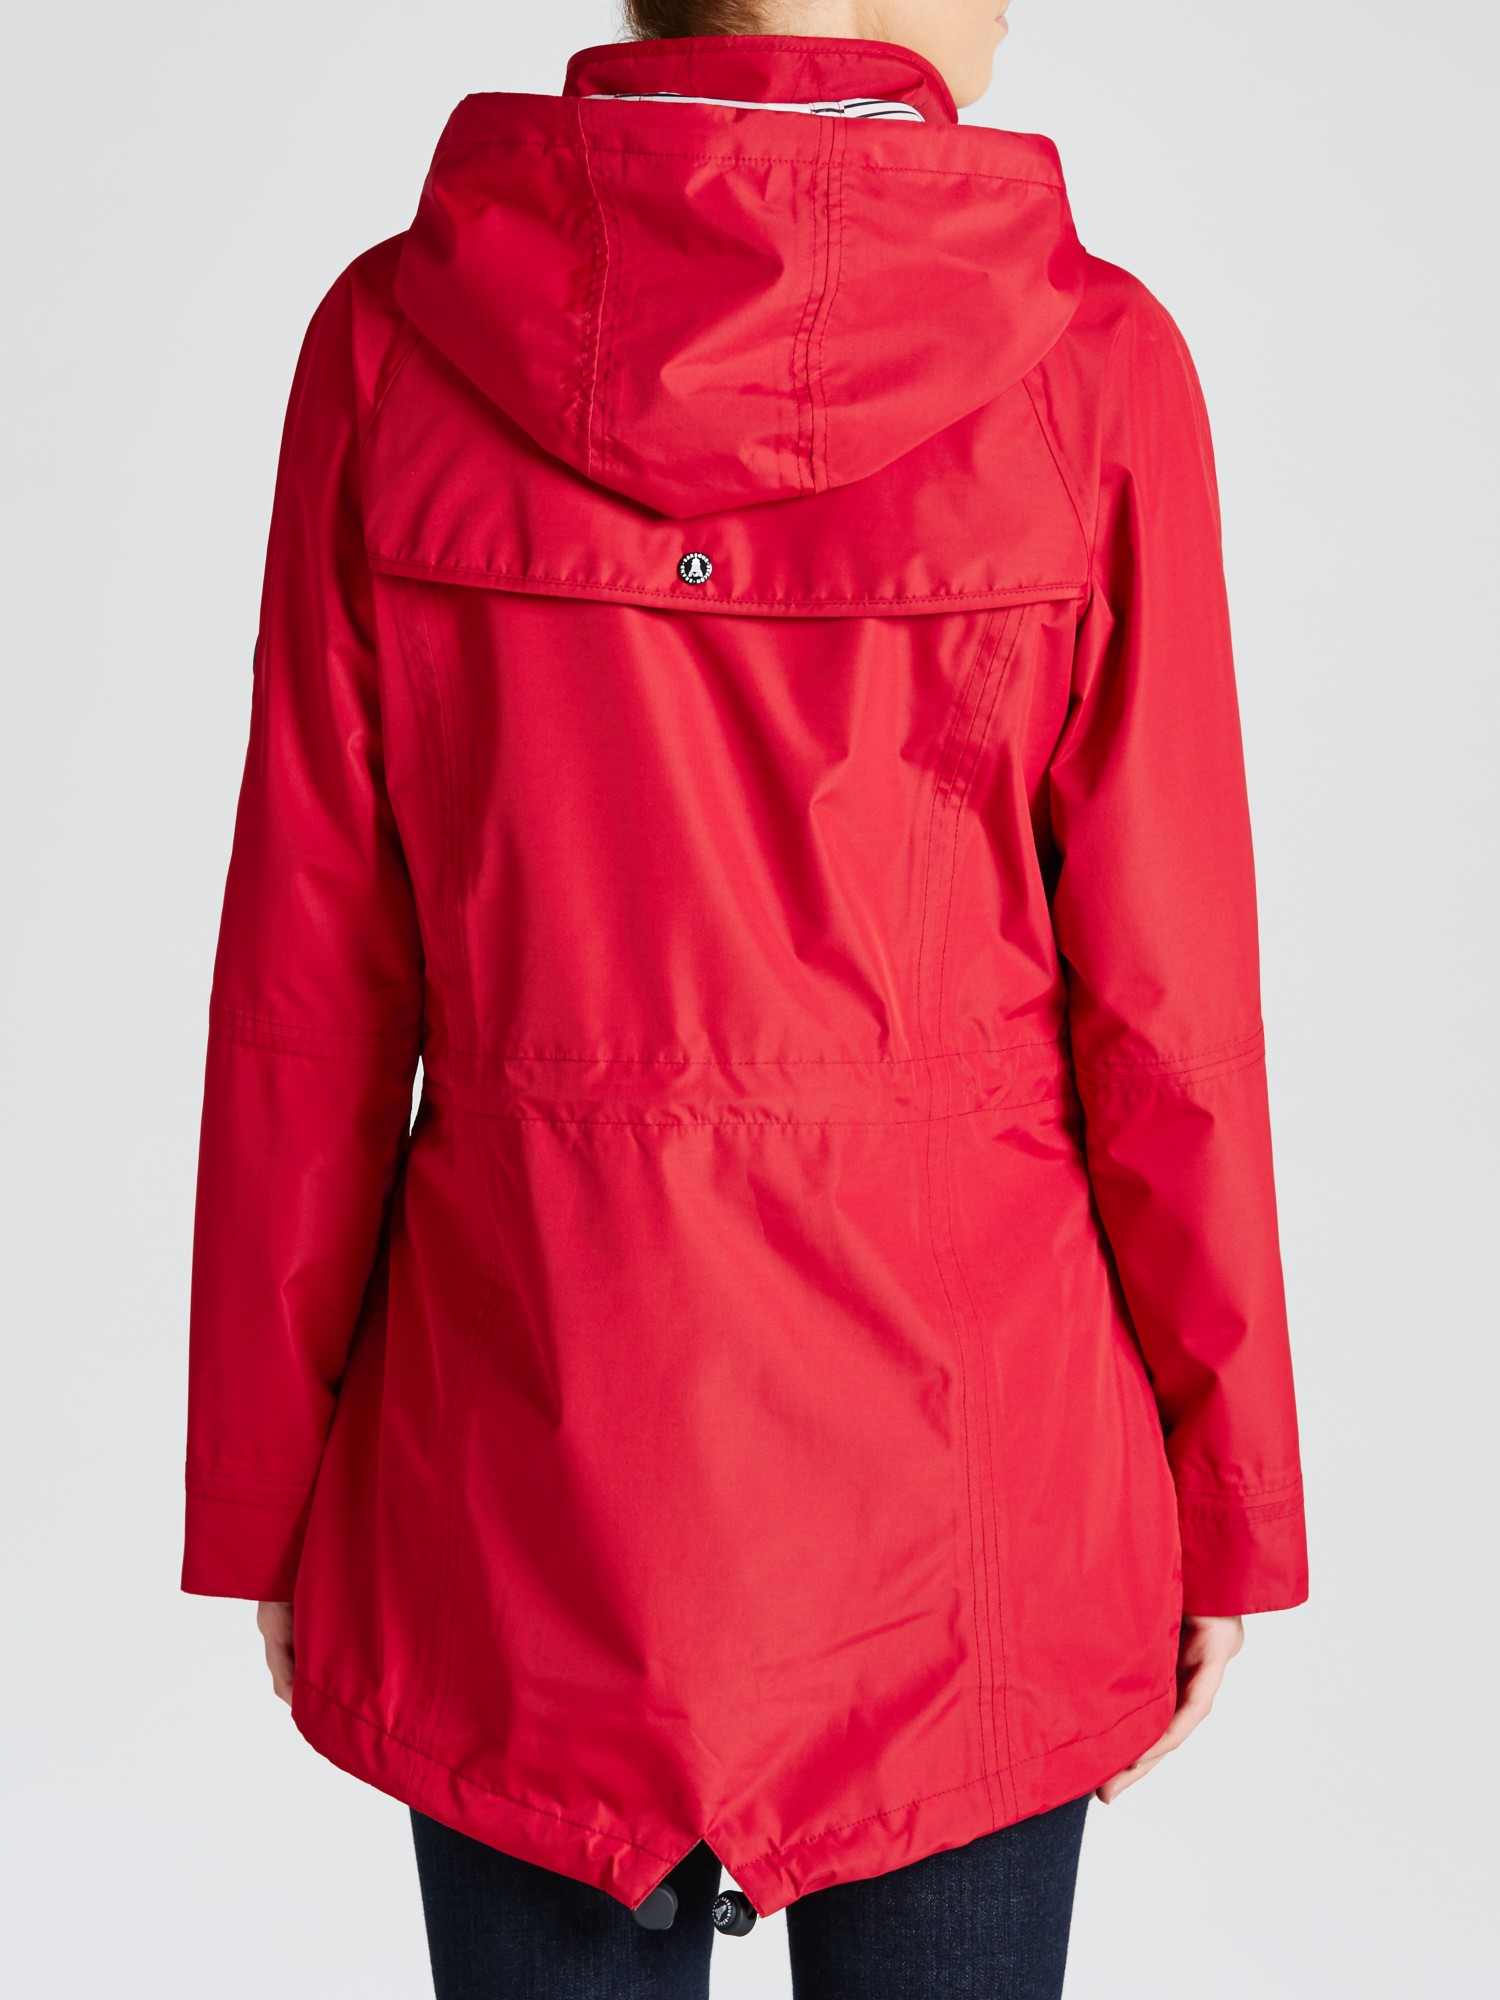 Barbour Trevose Waterproof Jacket in Red - Lyst